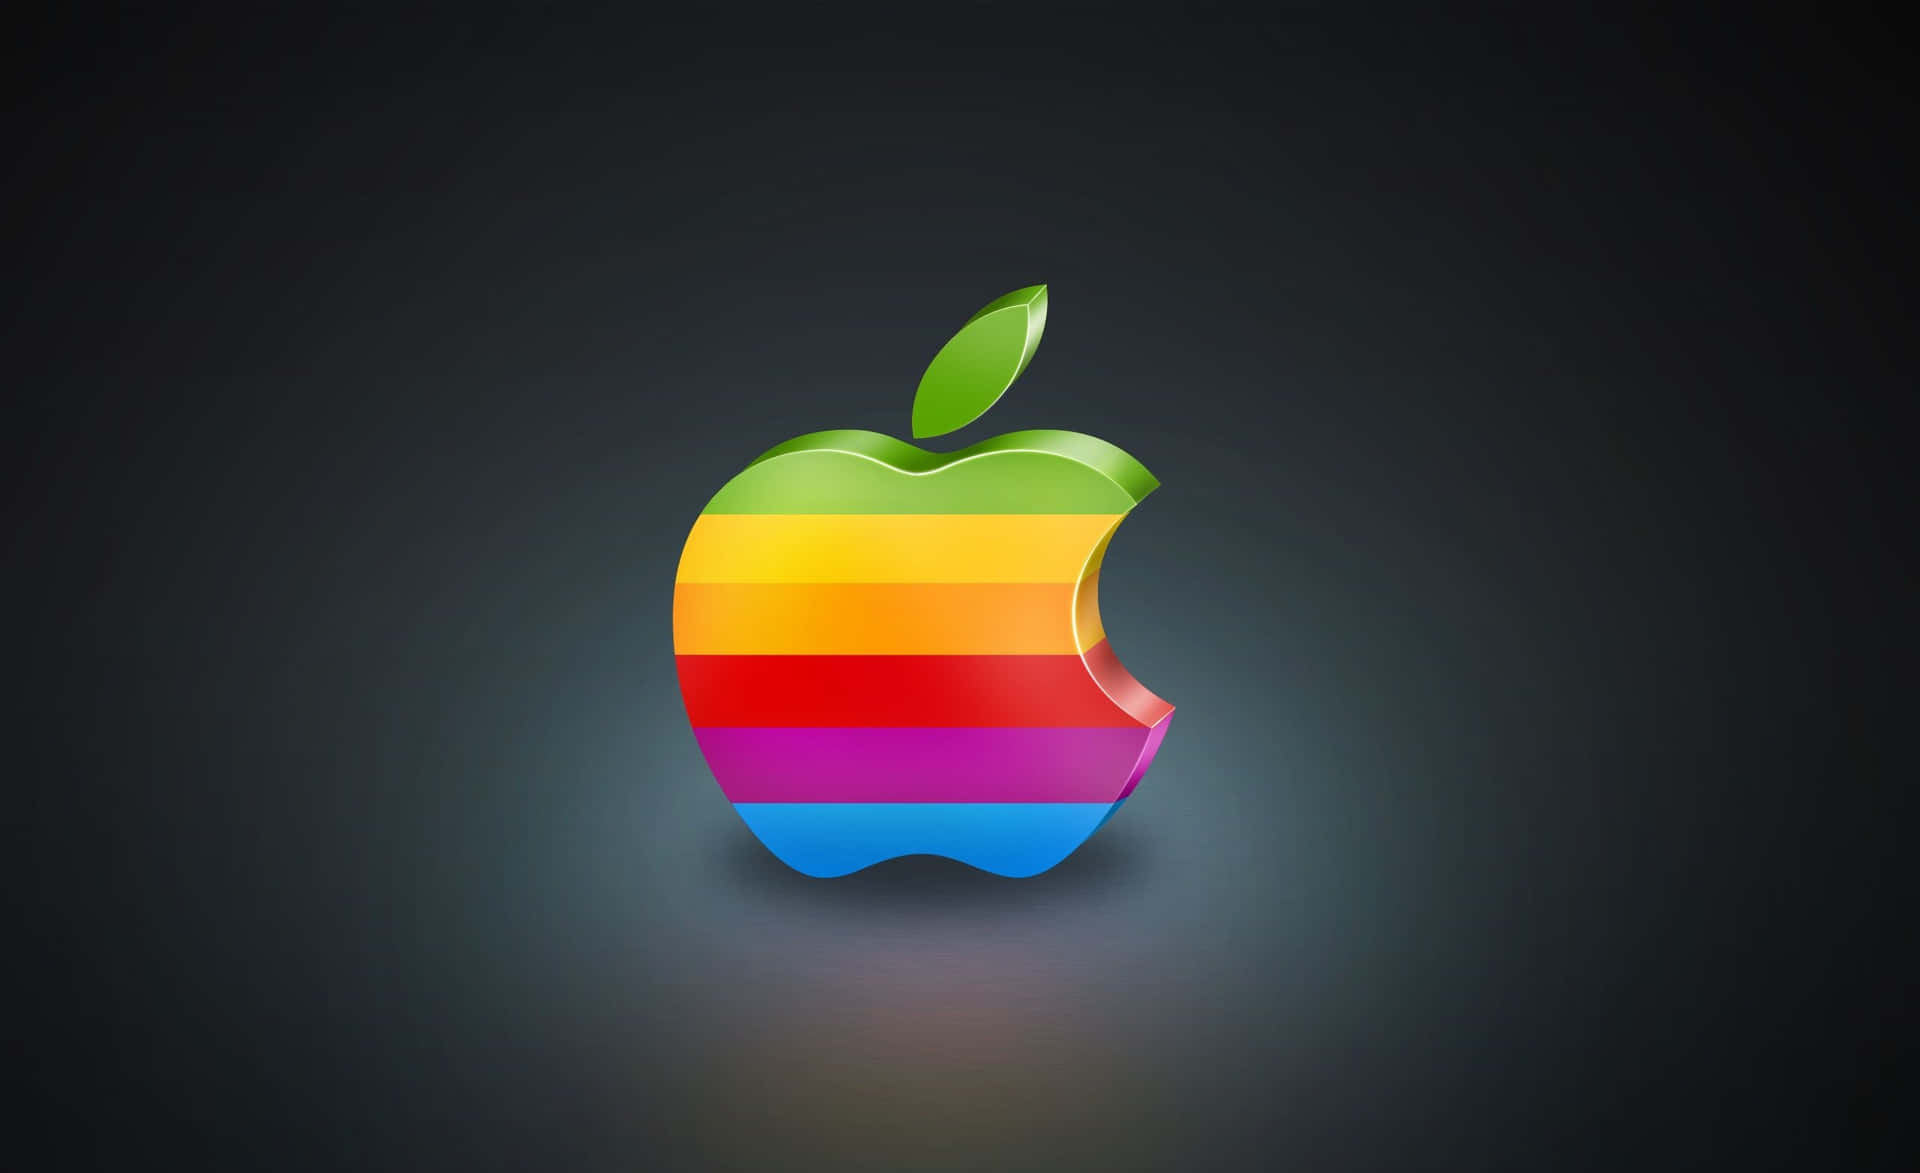 Fondosde Pantalla Del Logotipo De Apple En Hd. Fondo de pantalla